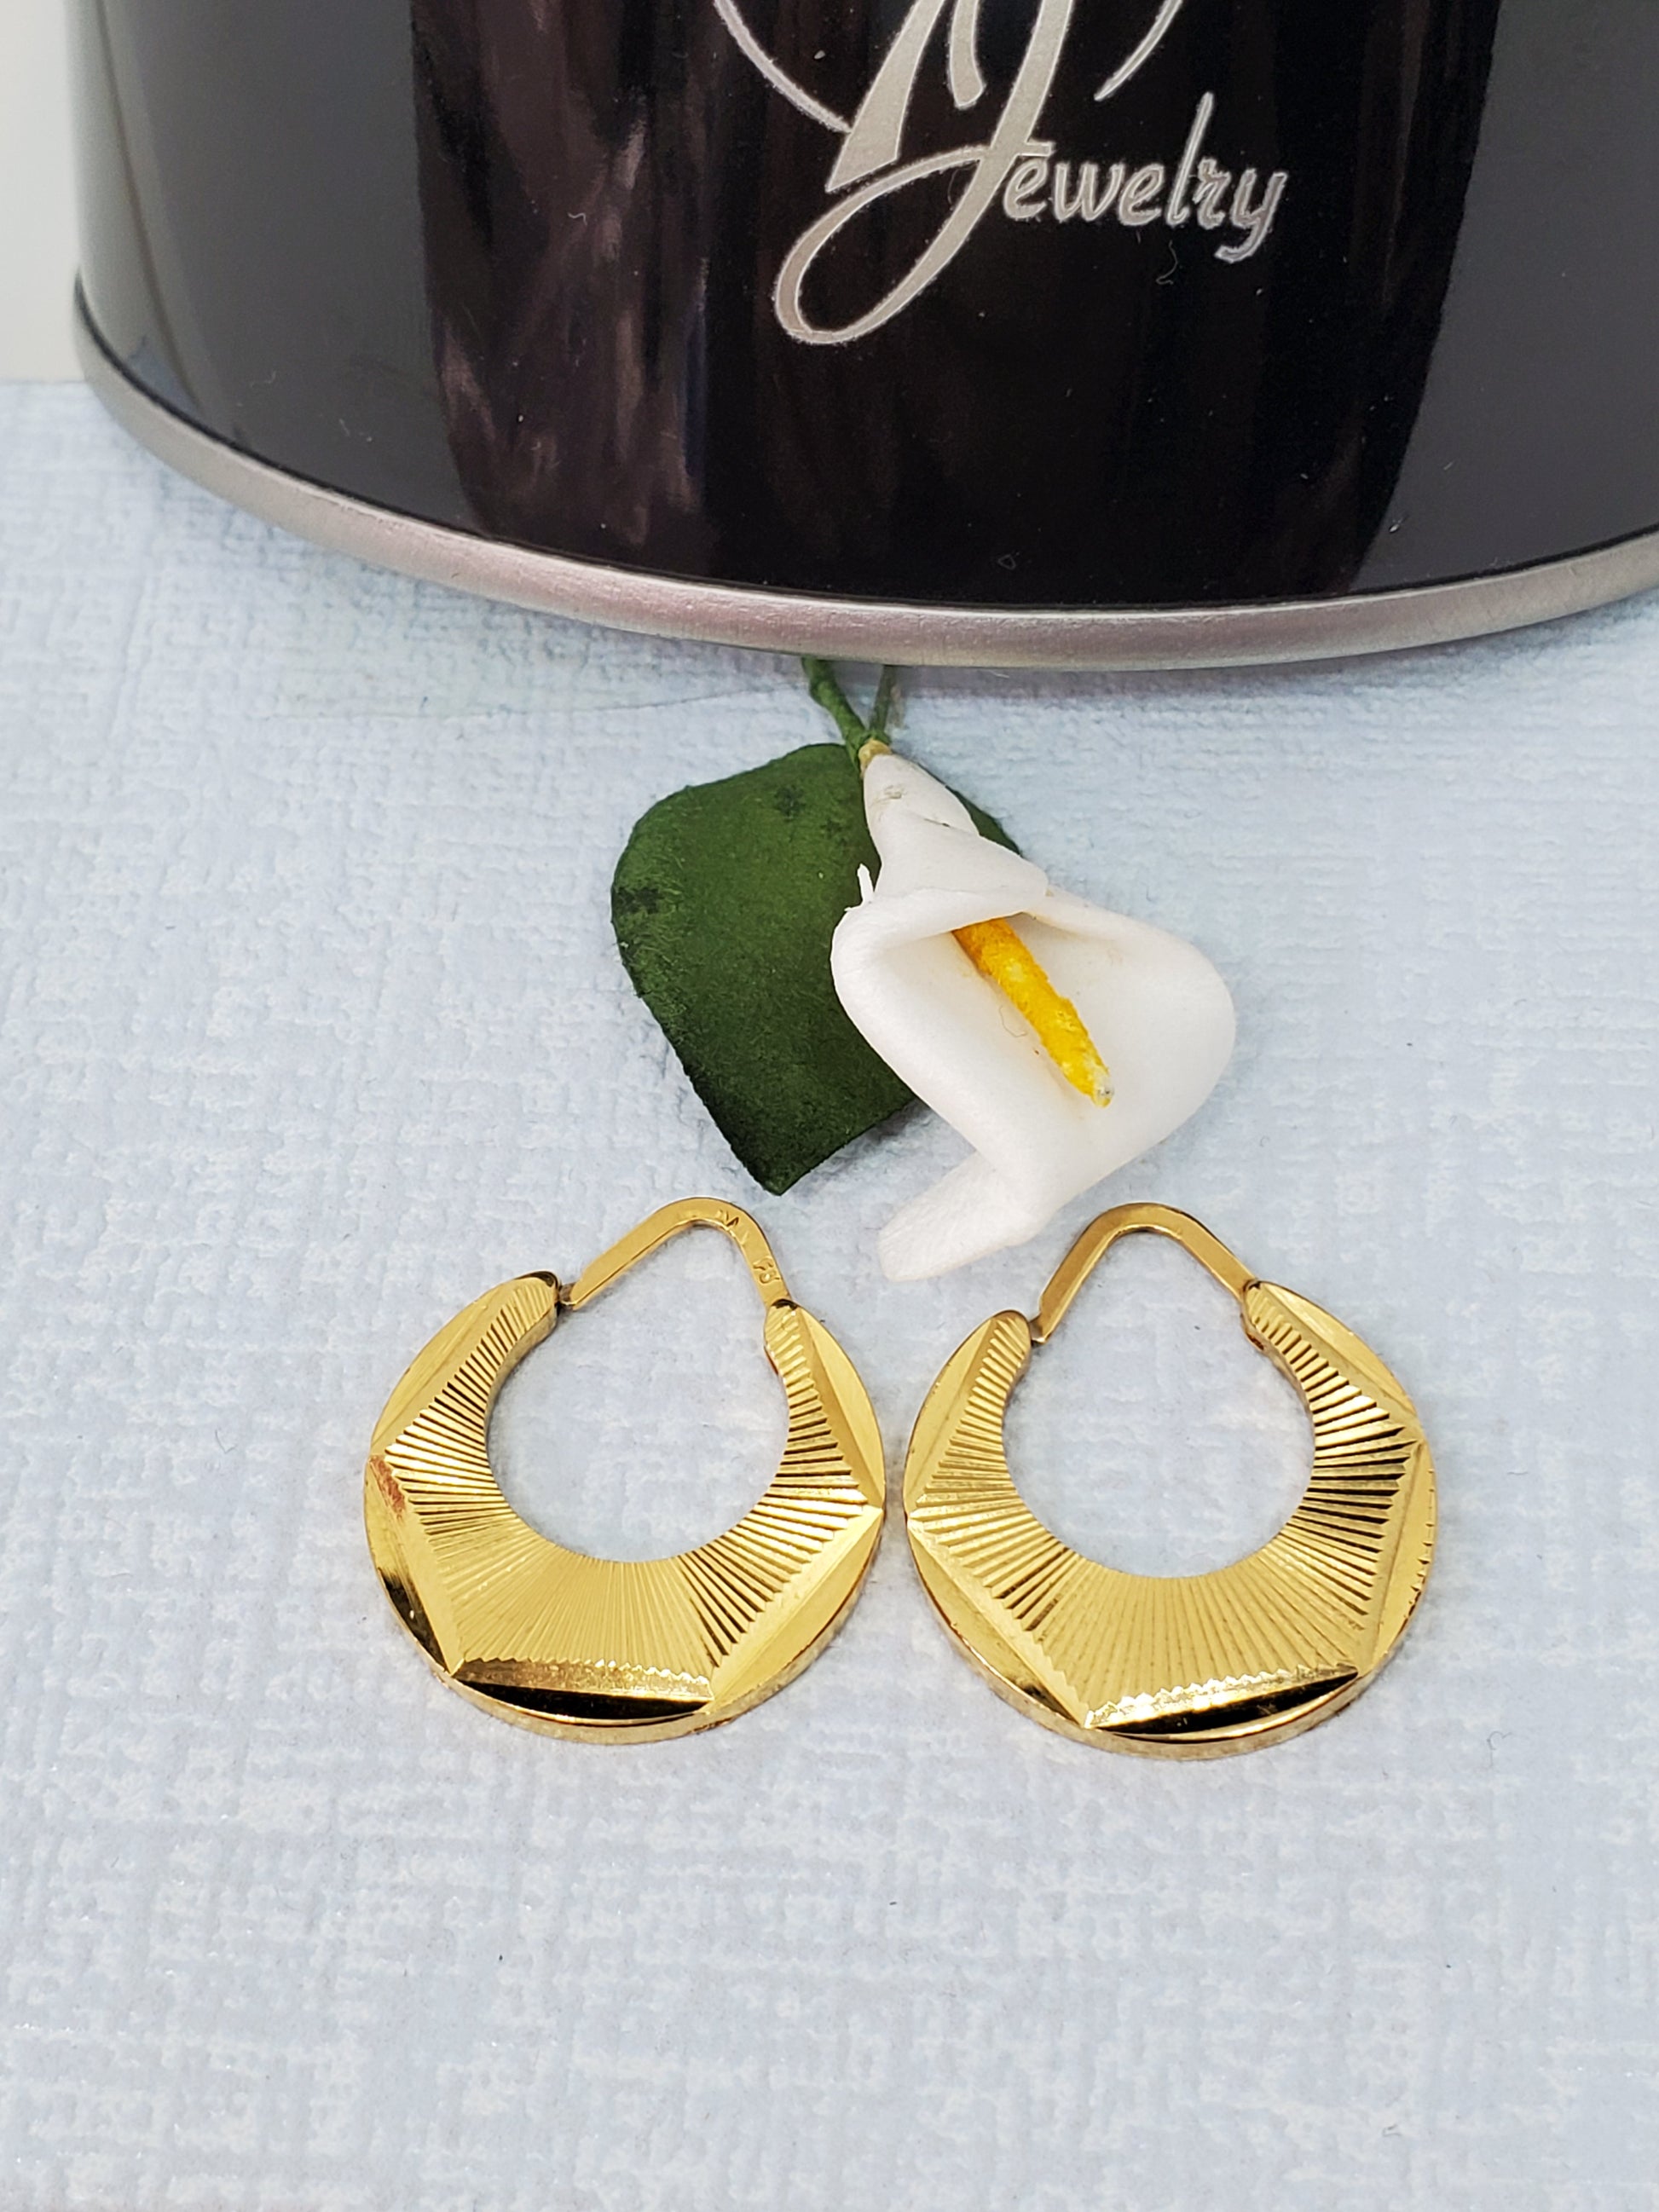 Nattiyan Gold Plated Earrings - 7Jewelry